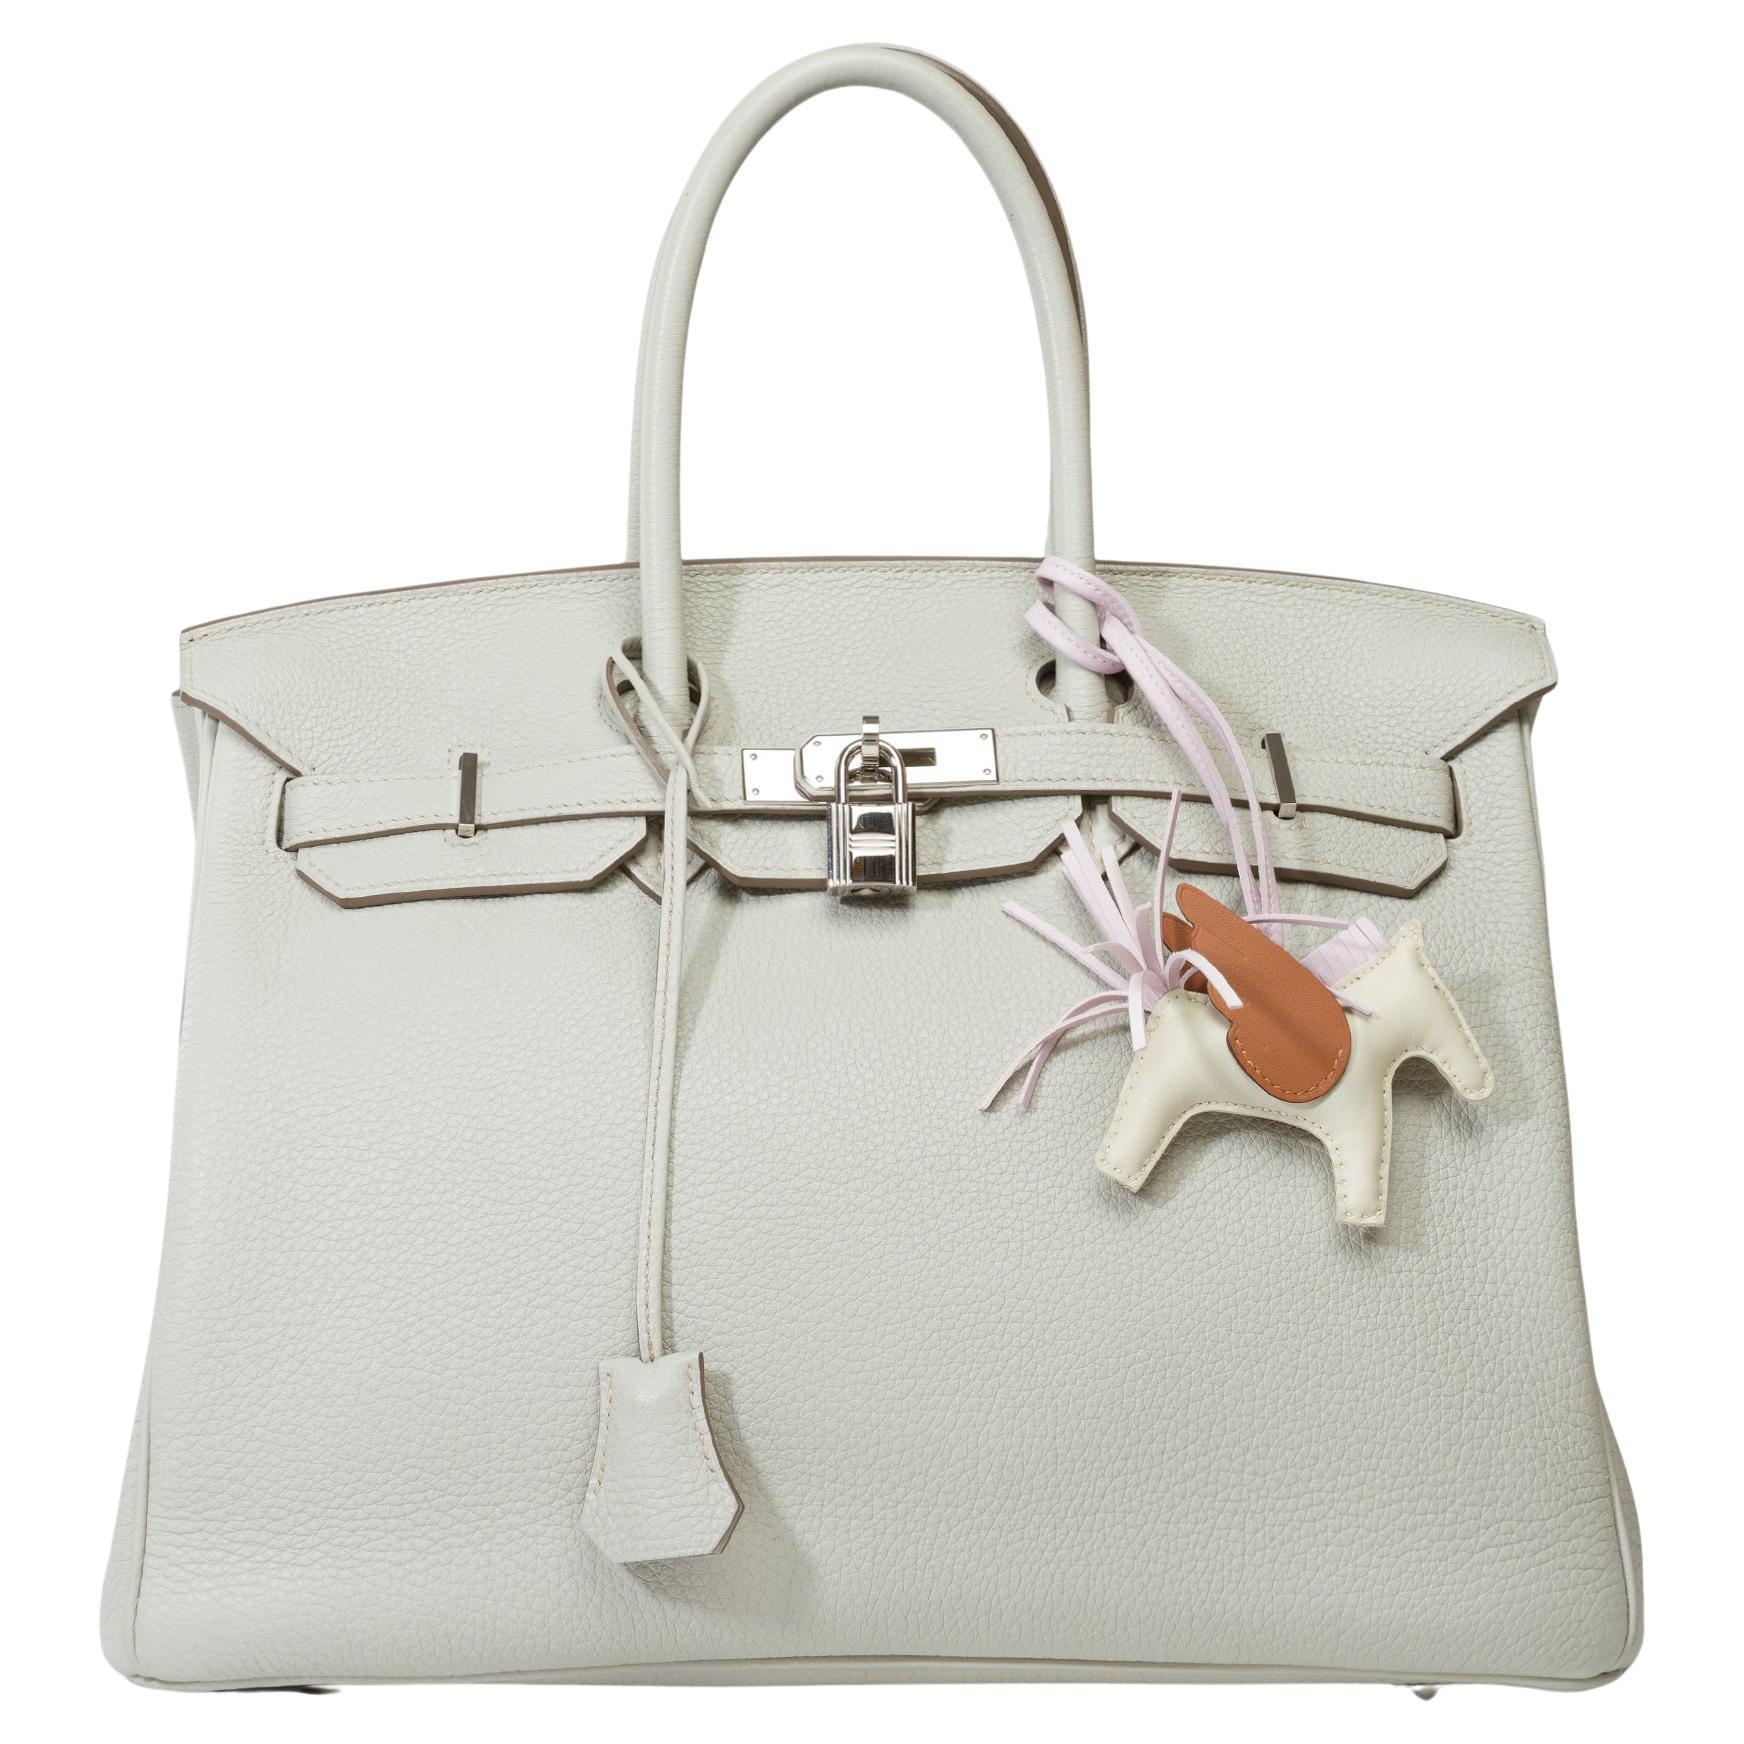 Amazing Hermès Birkin 35 handbag in Gris Perle Togo Calf leather, SHW For Sale